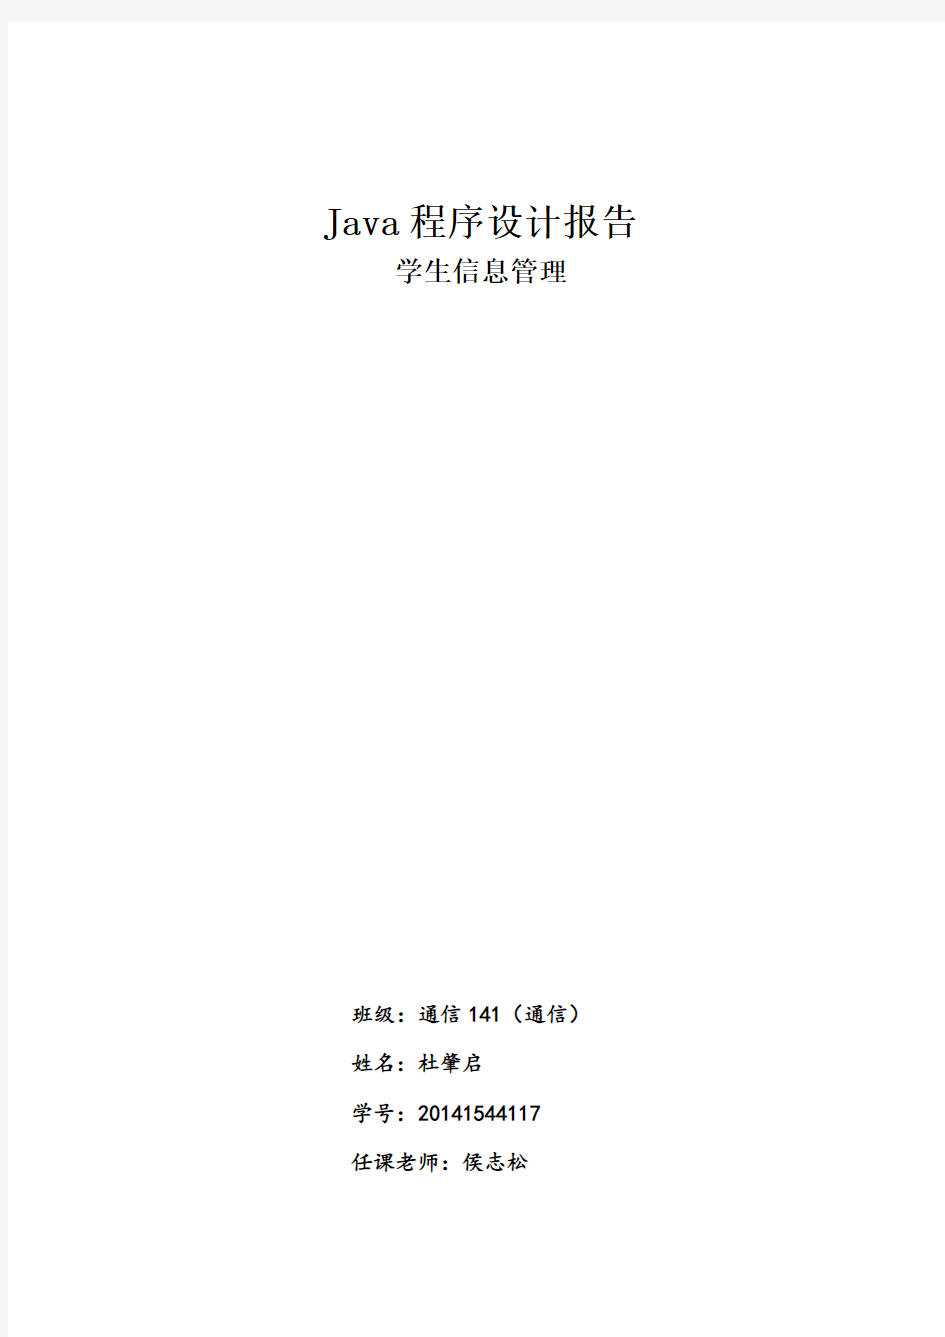 Java程序课程设计报告